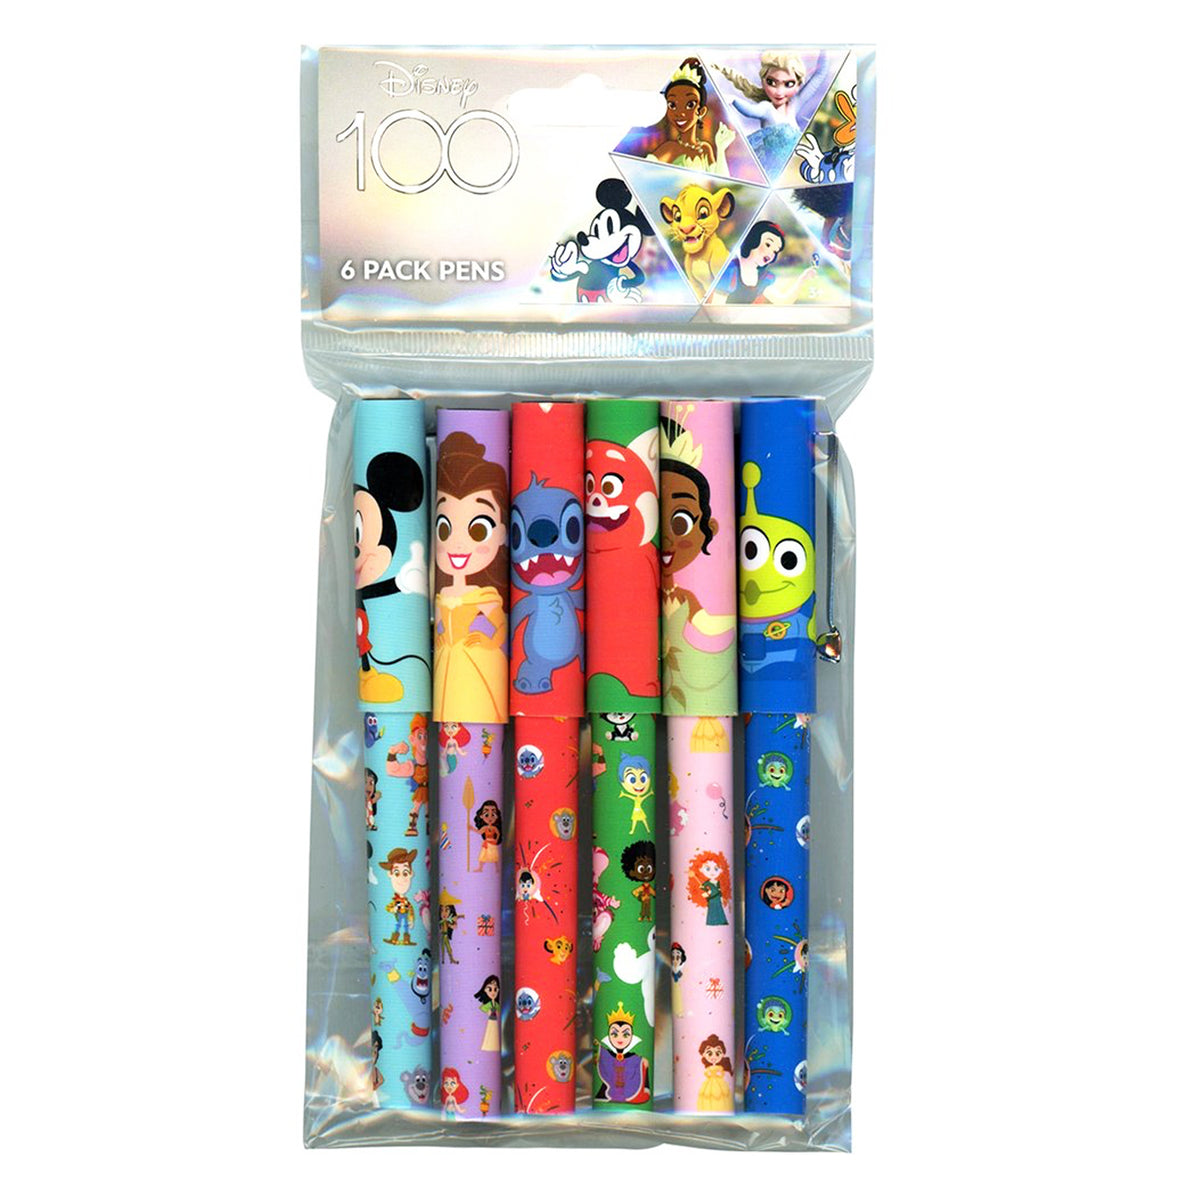 Disney 100 6 Pen Stationary Set